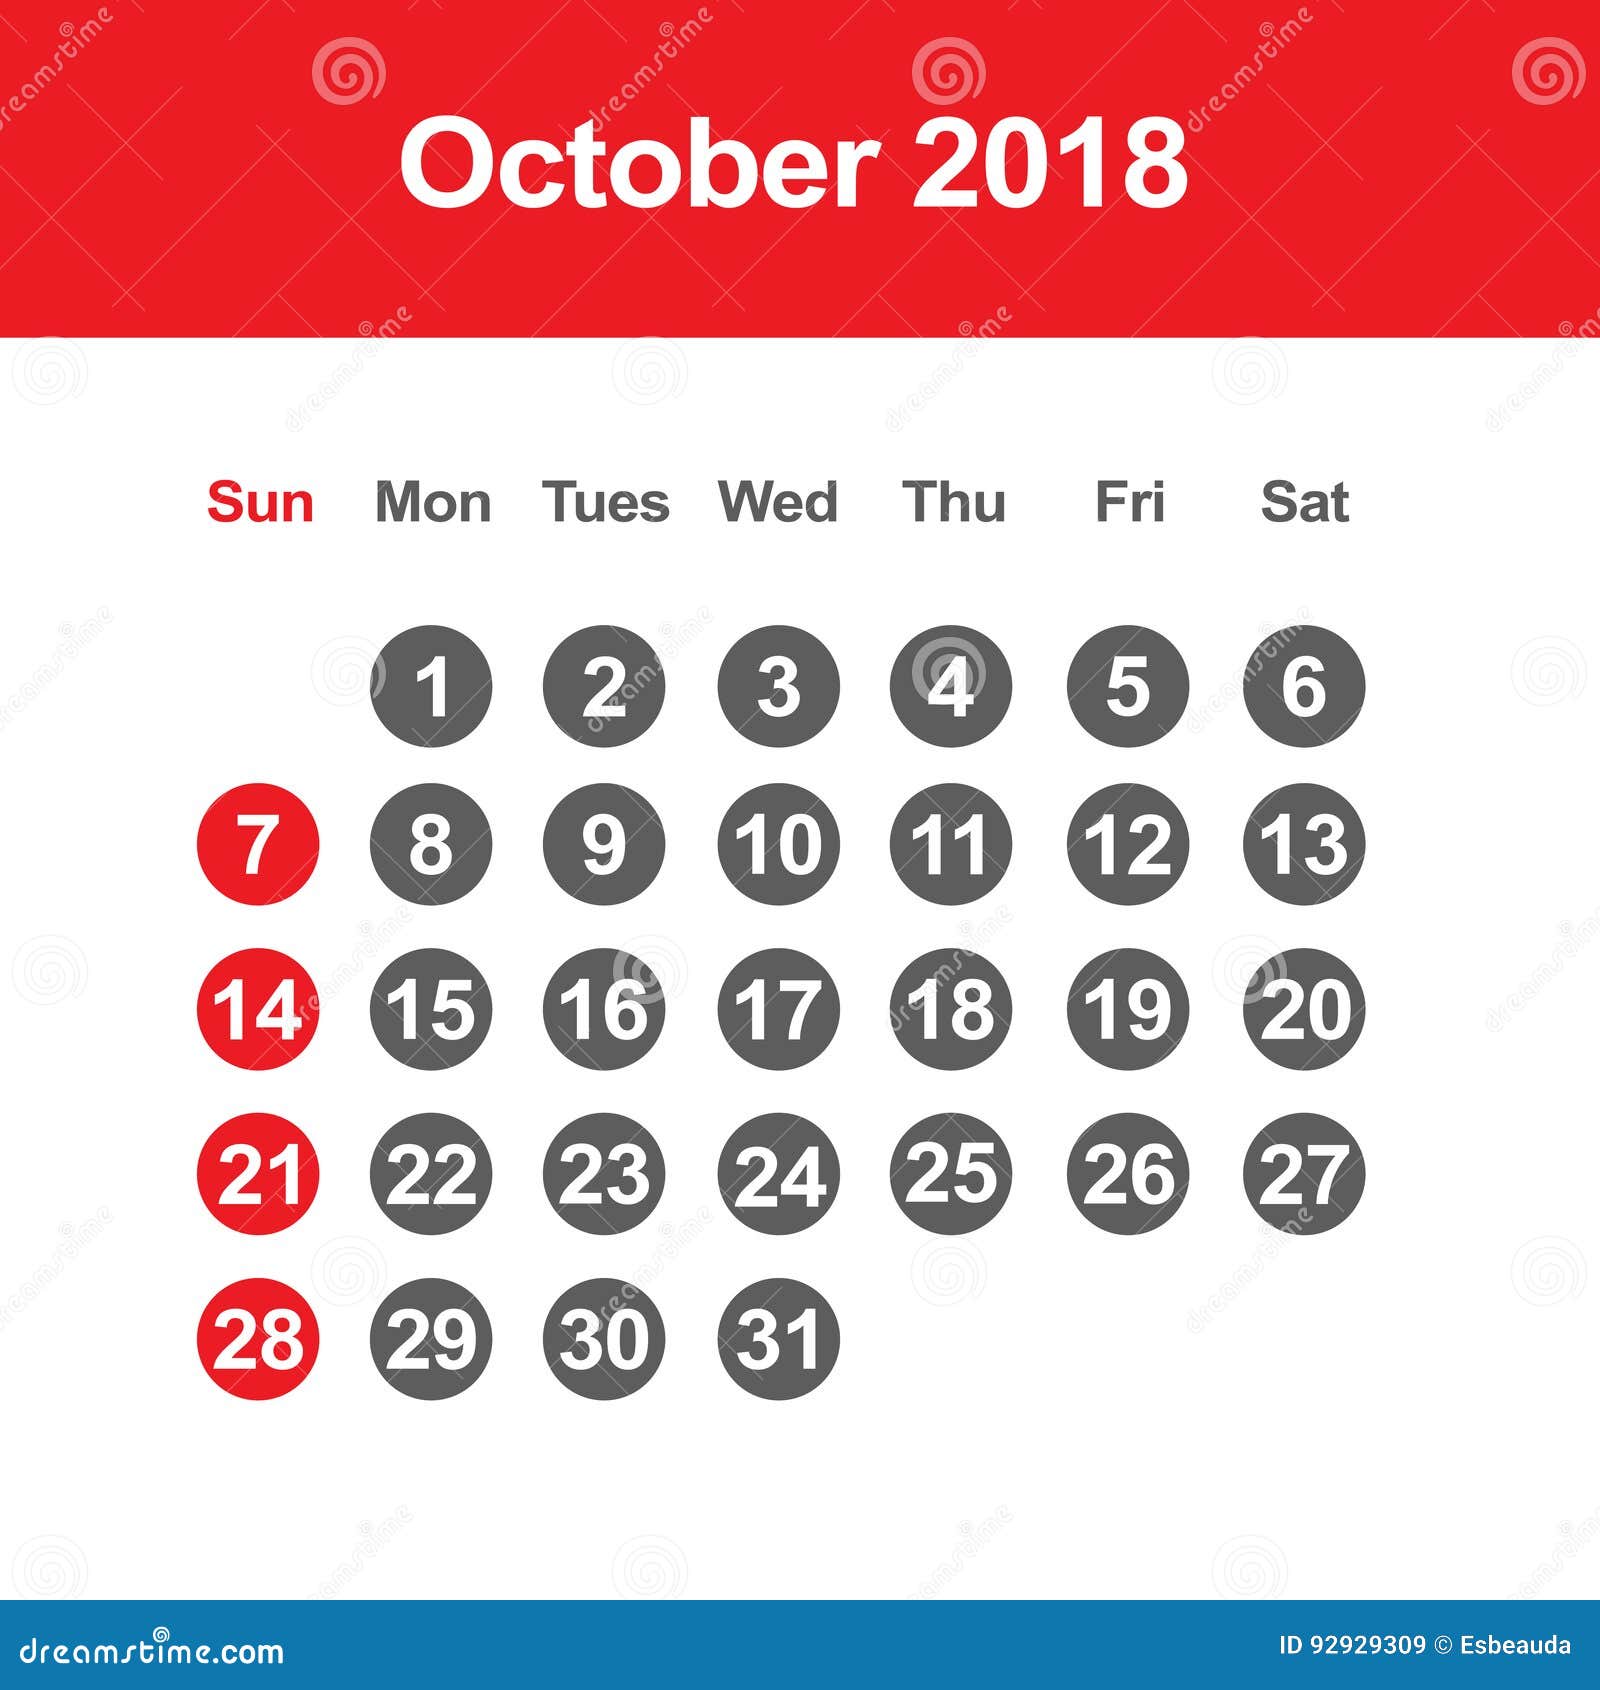 october-2018-calendar-wallpapers-october-calendar-wallpaper-desktop